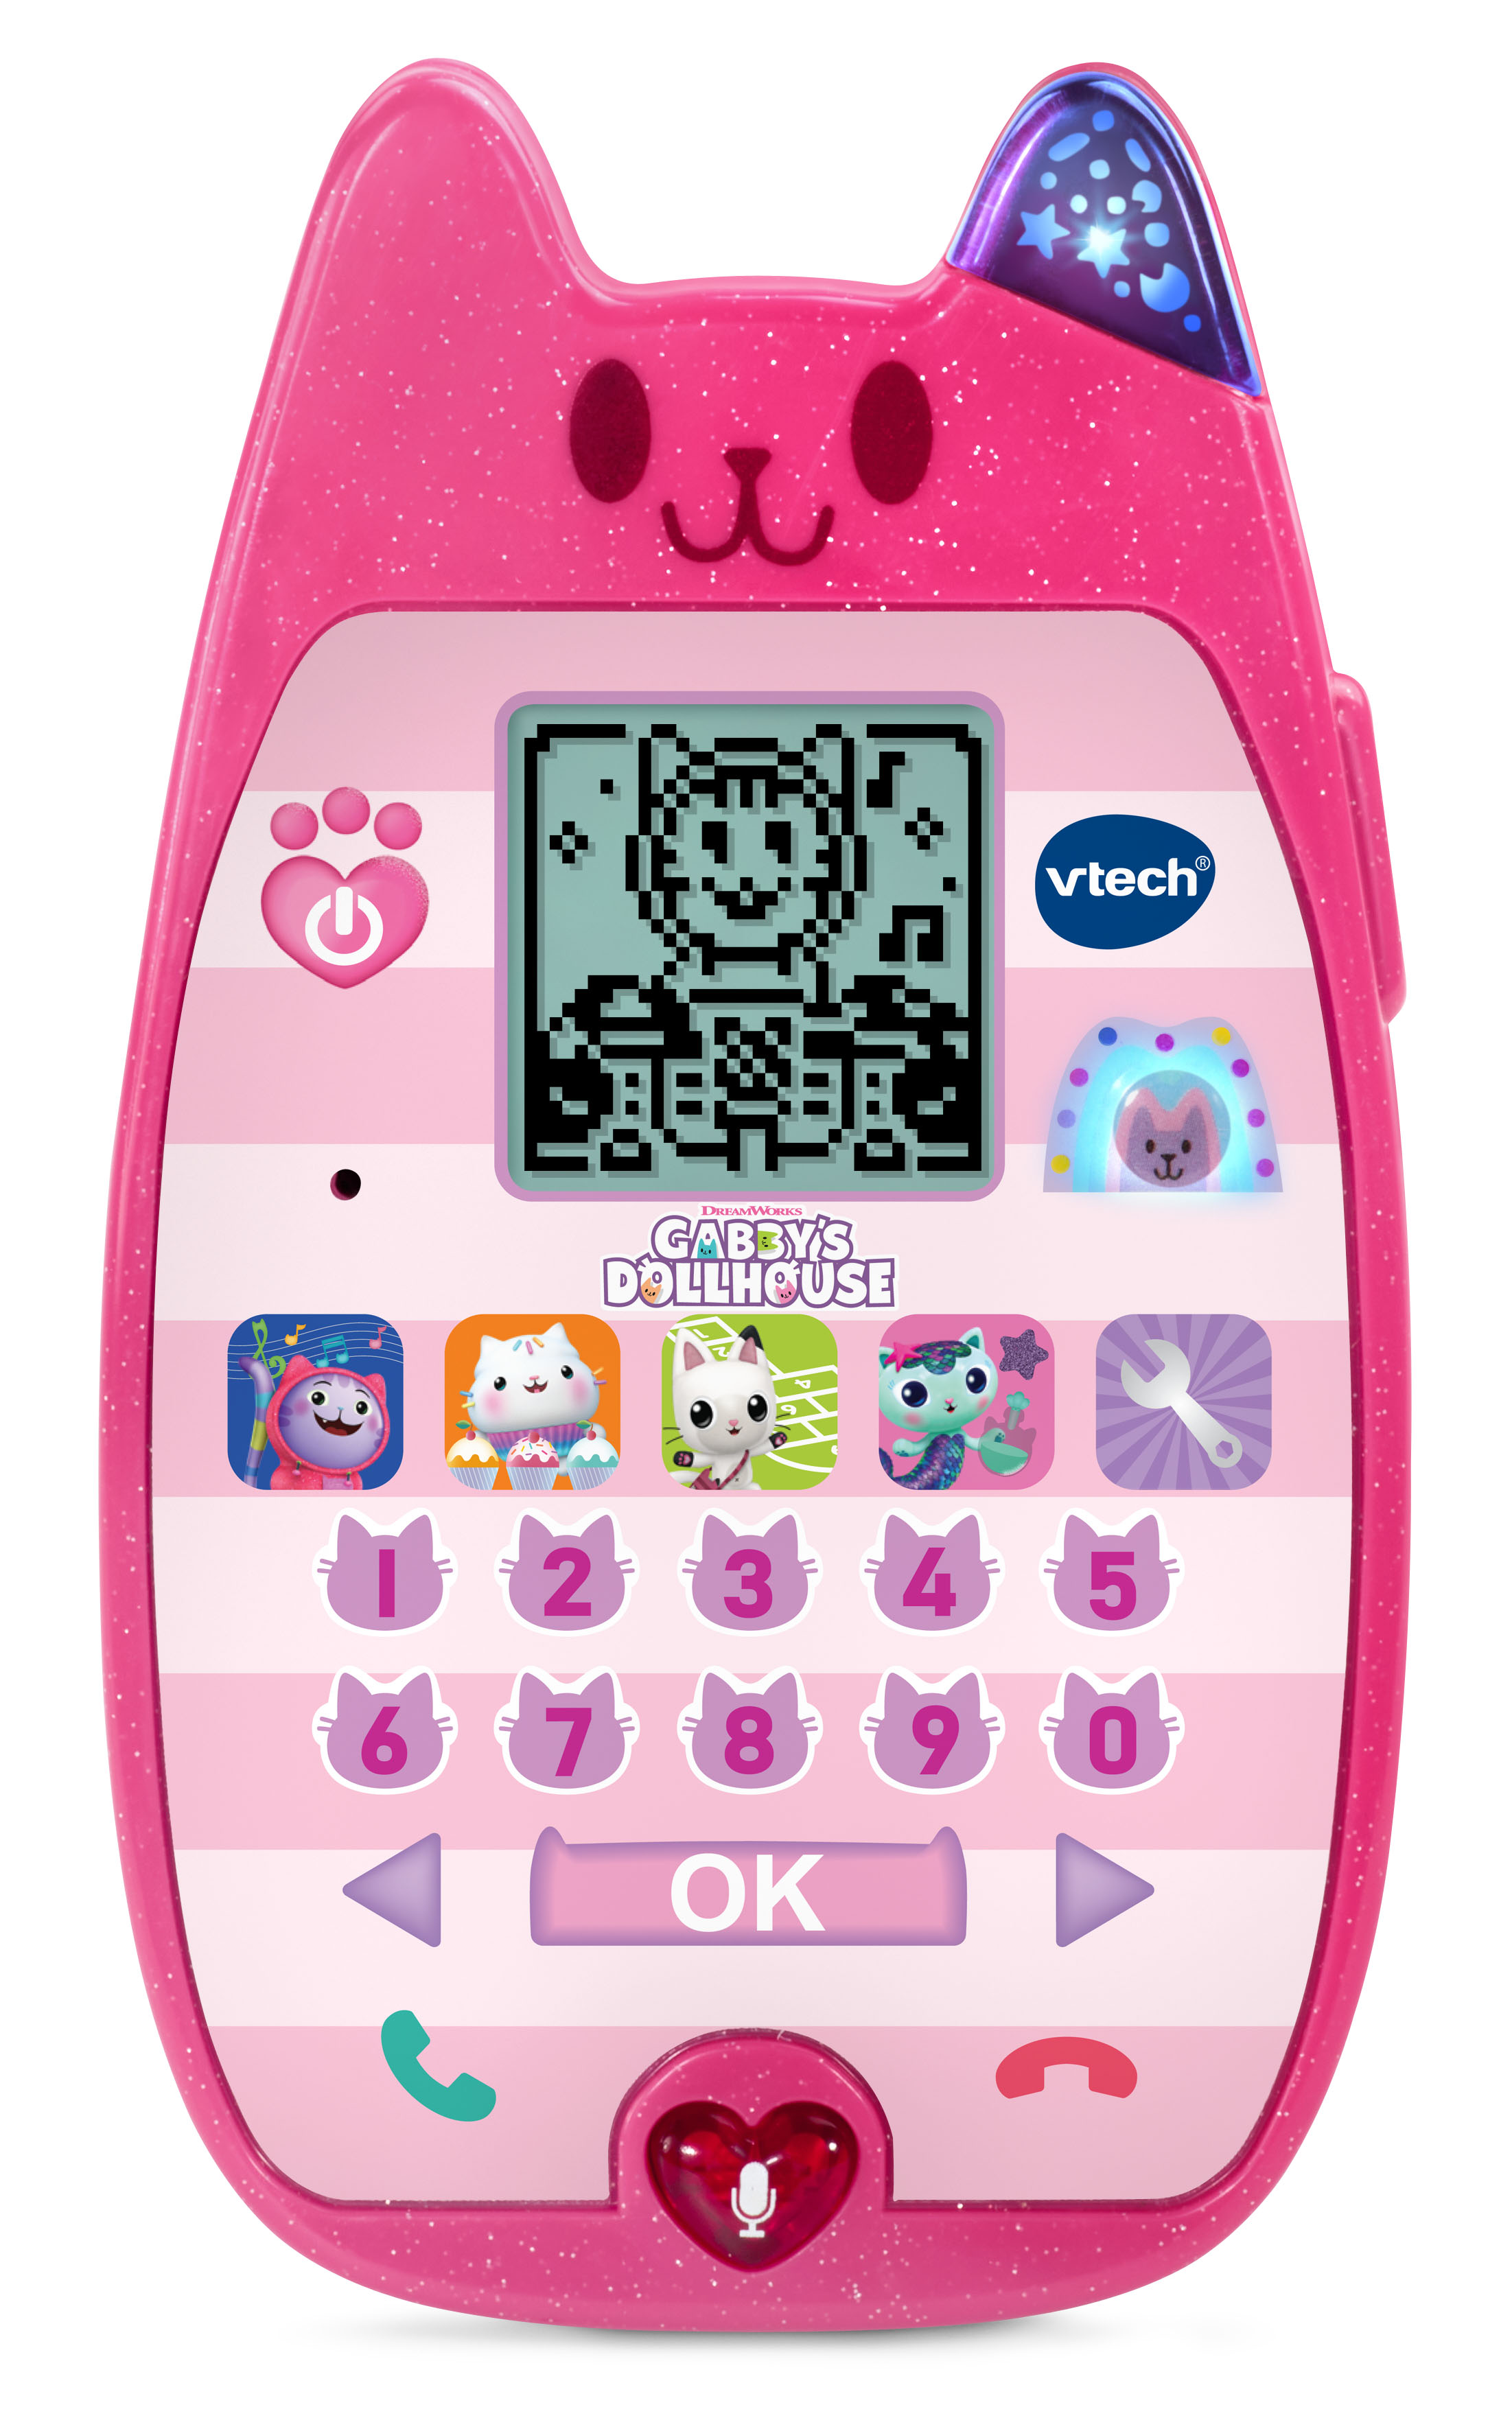 Gabby's Dollhouse A-Meow-Zing Phone